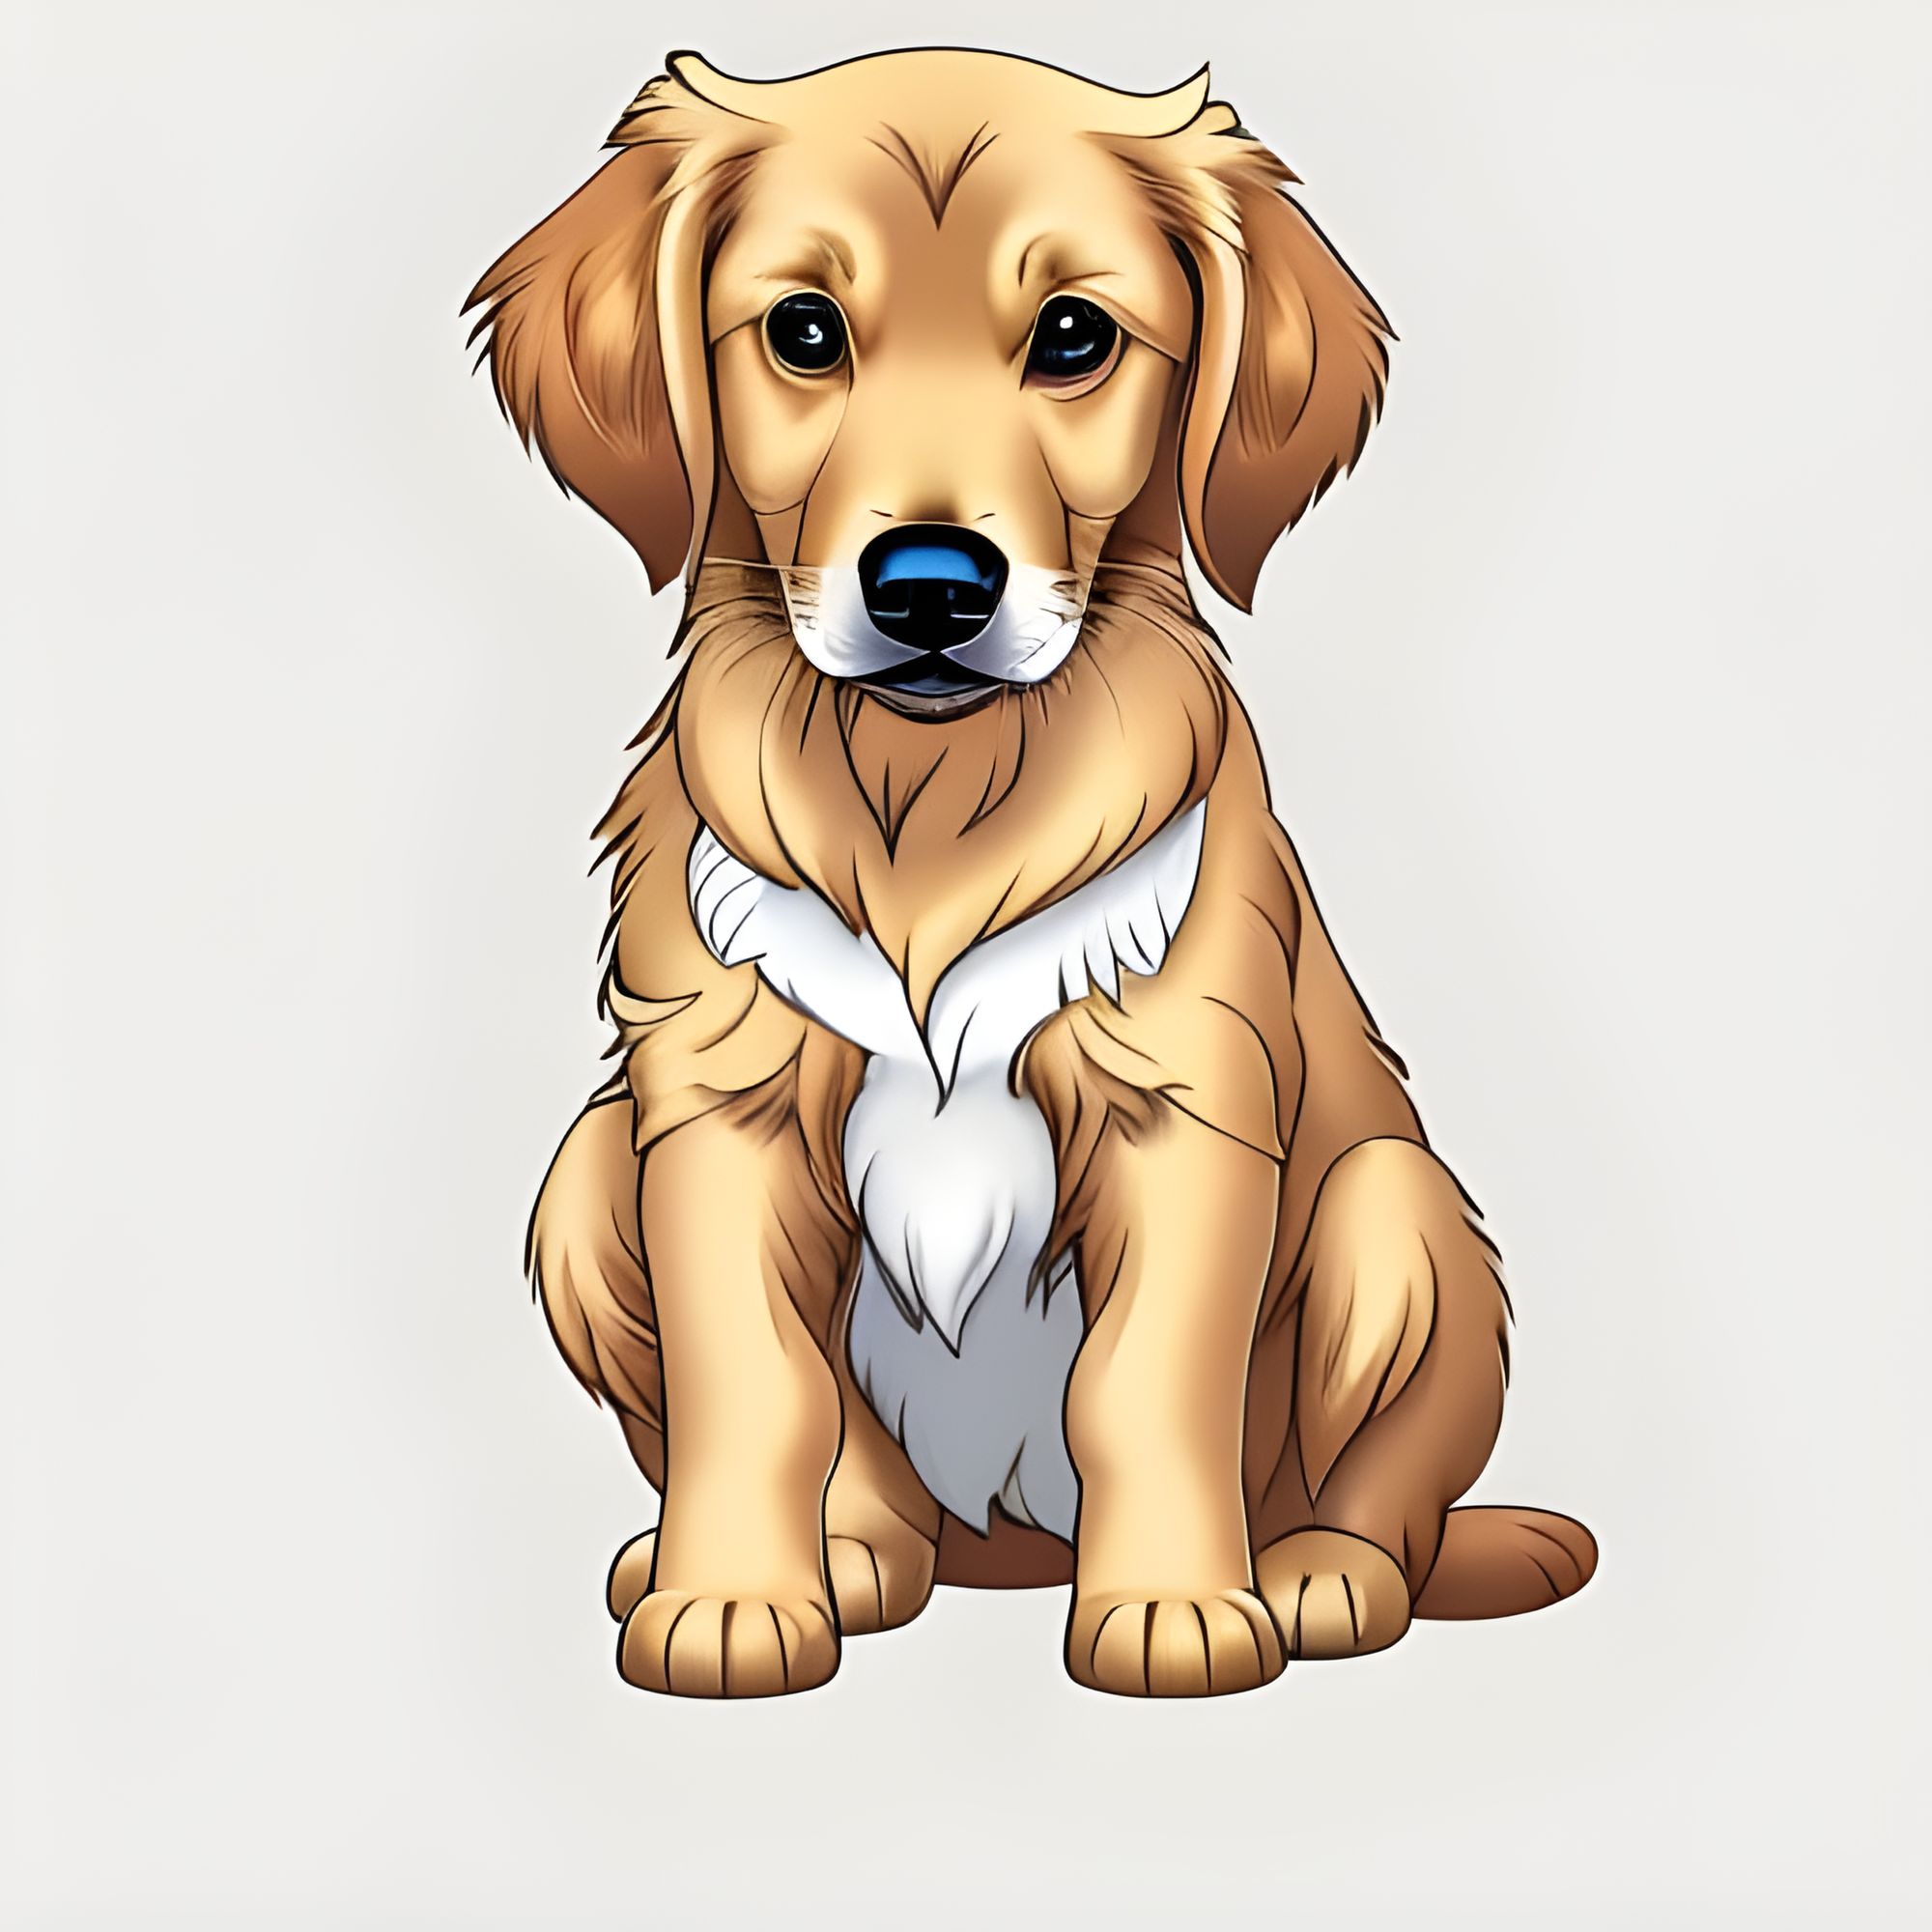 Premium Vector  Watercolor puppy dog cute golden retriever or labrador  doggy pet animal vector illustration